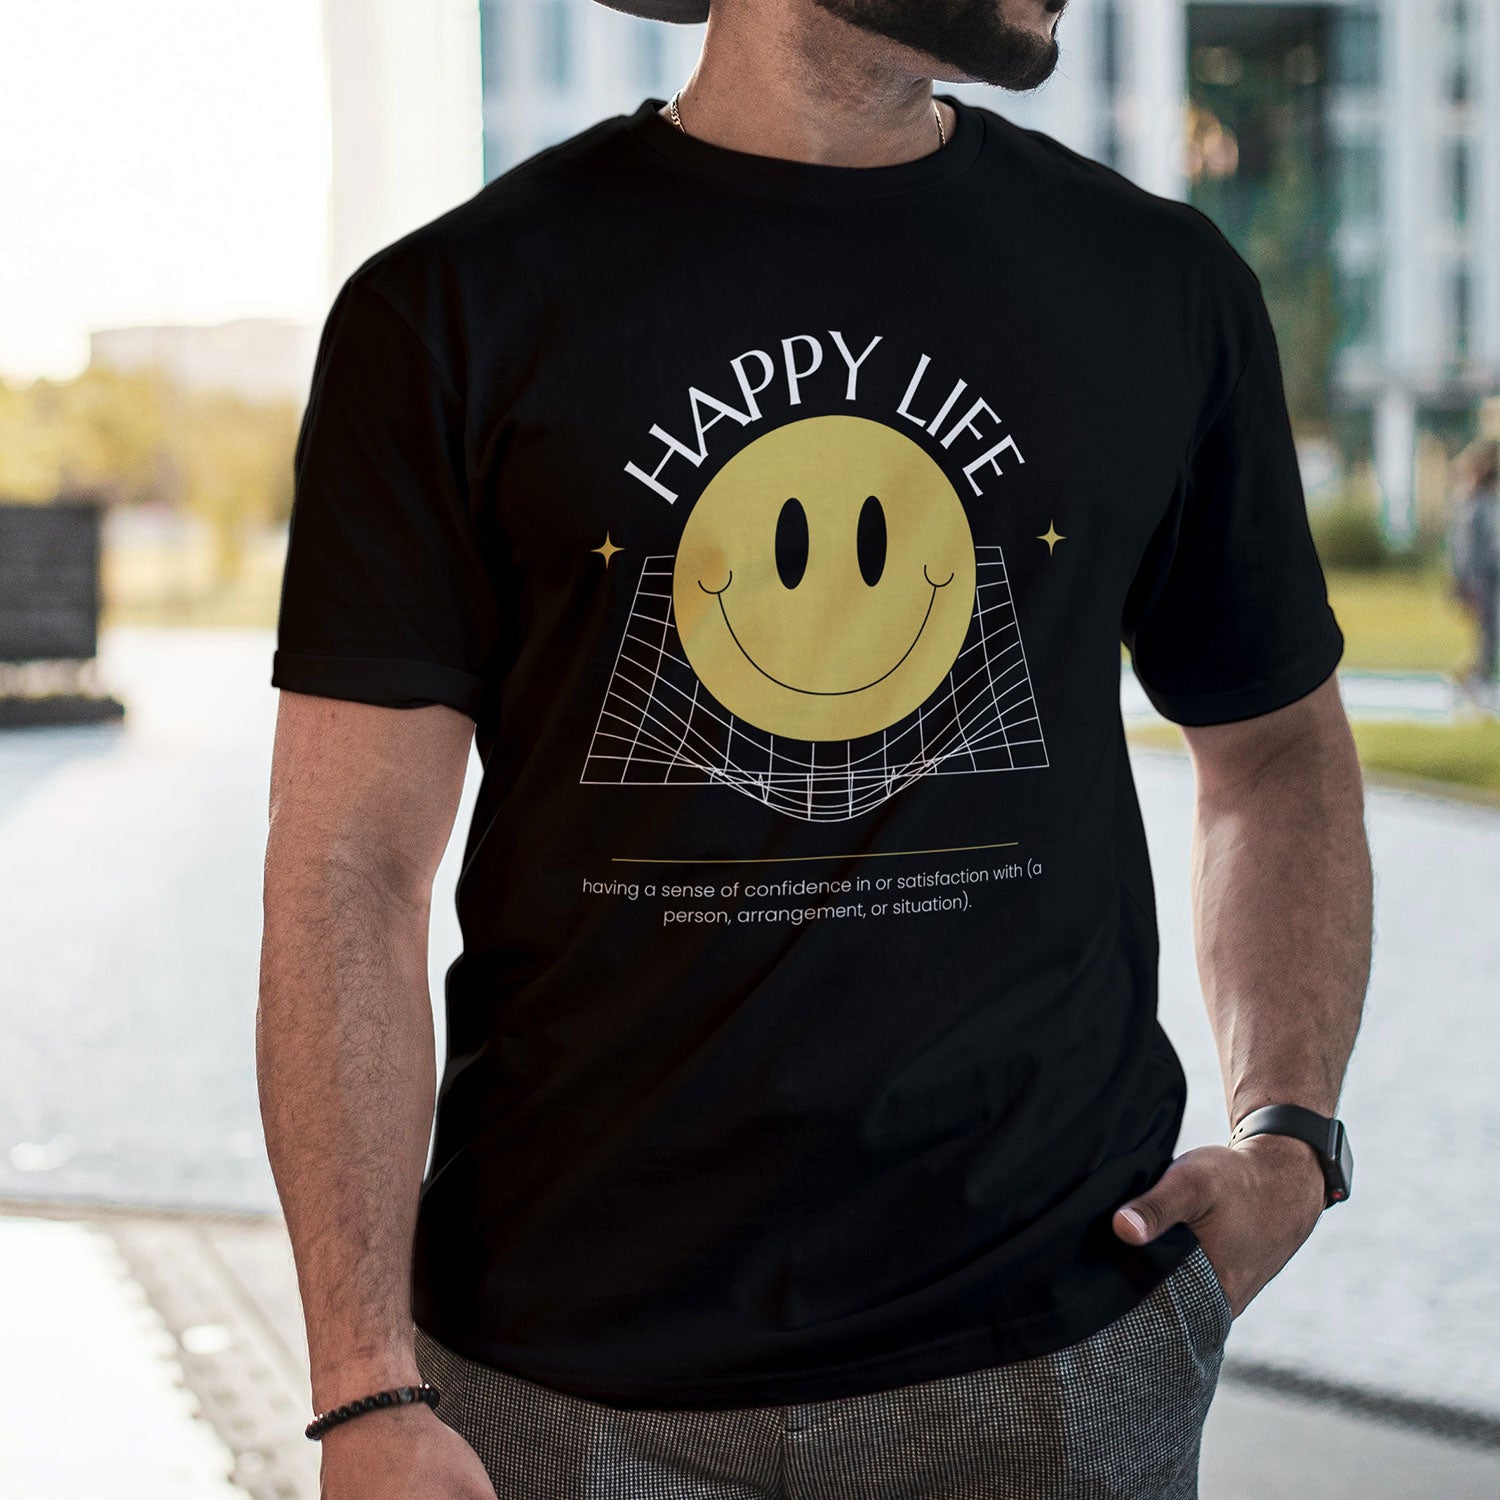 Happy Life Printed T-shirt For Men